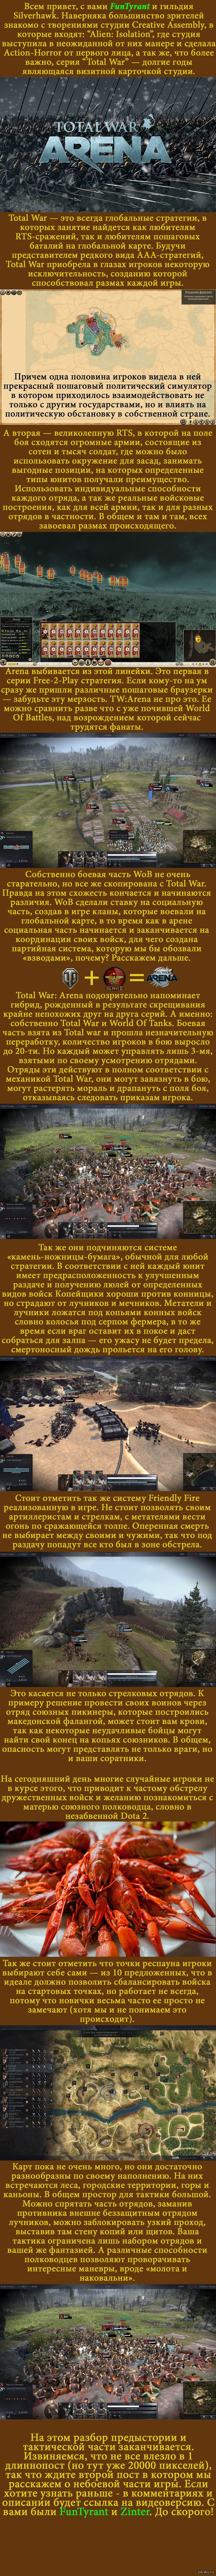   Total War: Arena  1.  ()  - http://www.youtube.com/watch?v=_rsT4MPRbrk      - <a href="http://pikabu.ru/profile/Zinter">http://pikabu.ru/profile/Zinter</a>